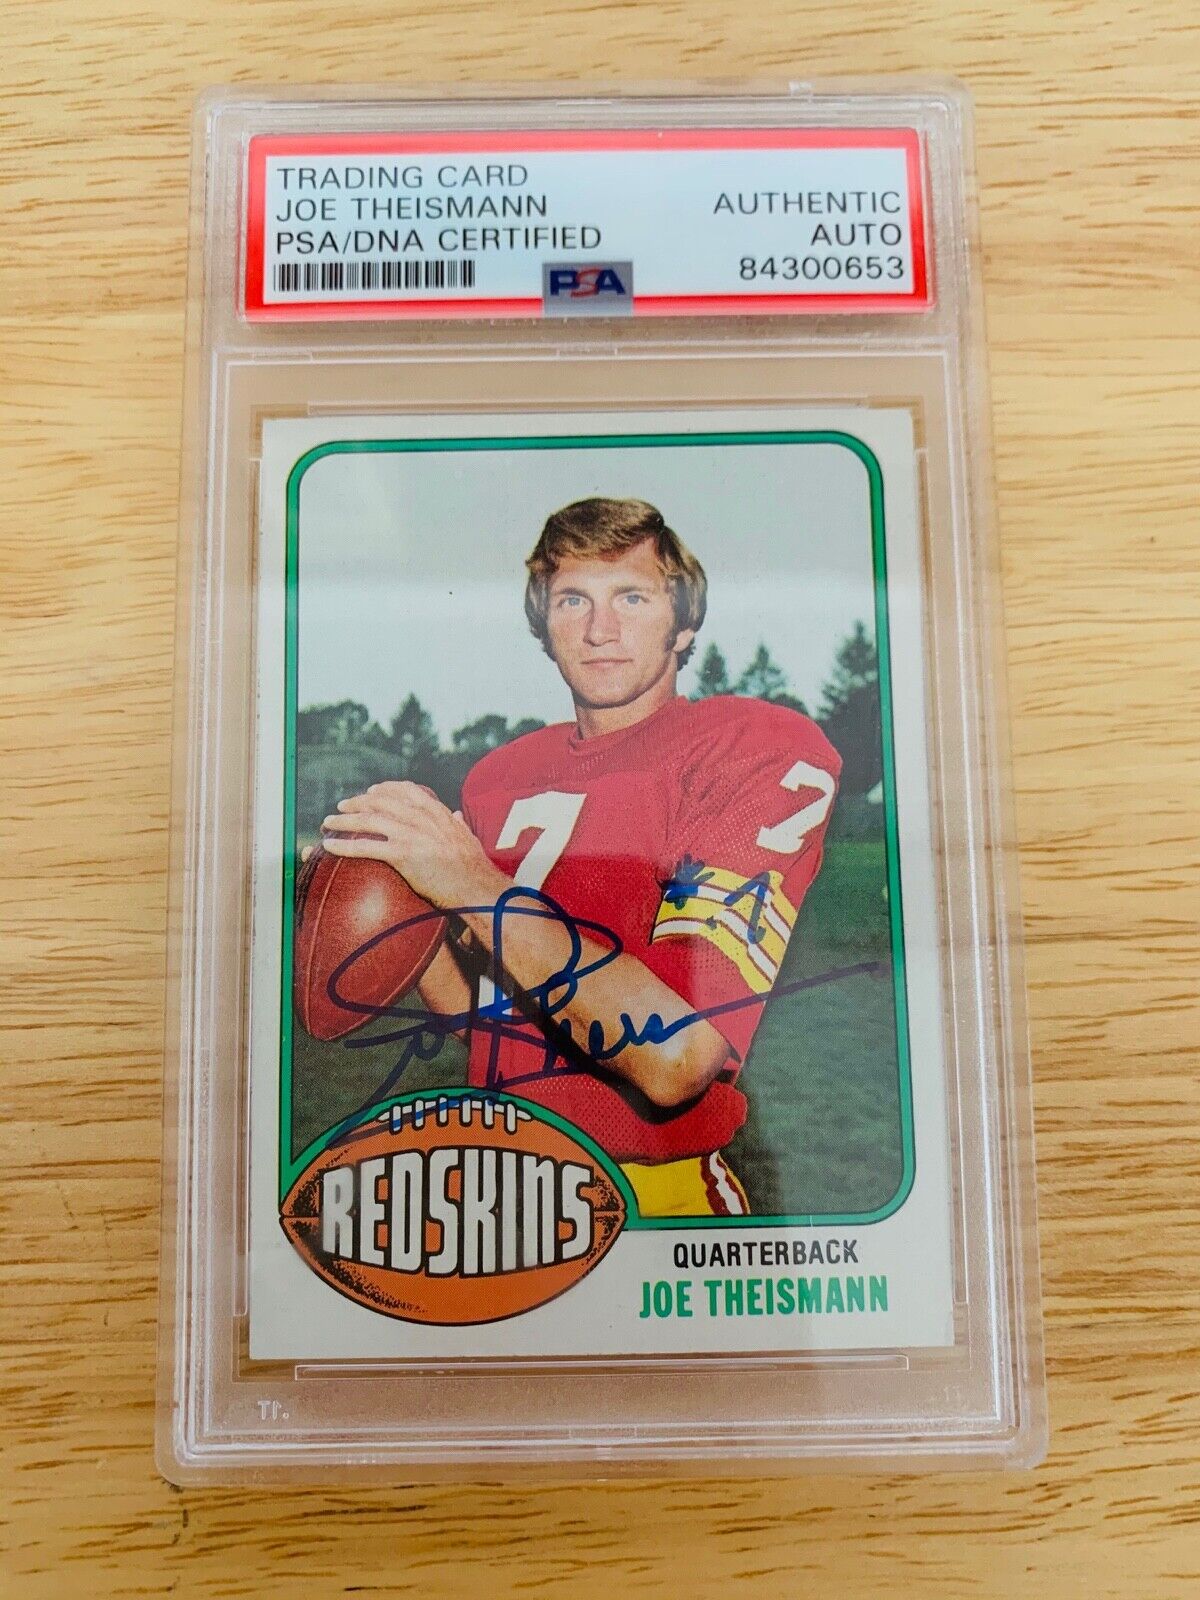 Joe Theismann Autographed 1976 Topps Football Card PSA Certified Slabbed